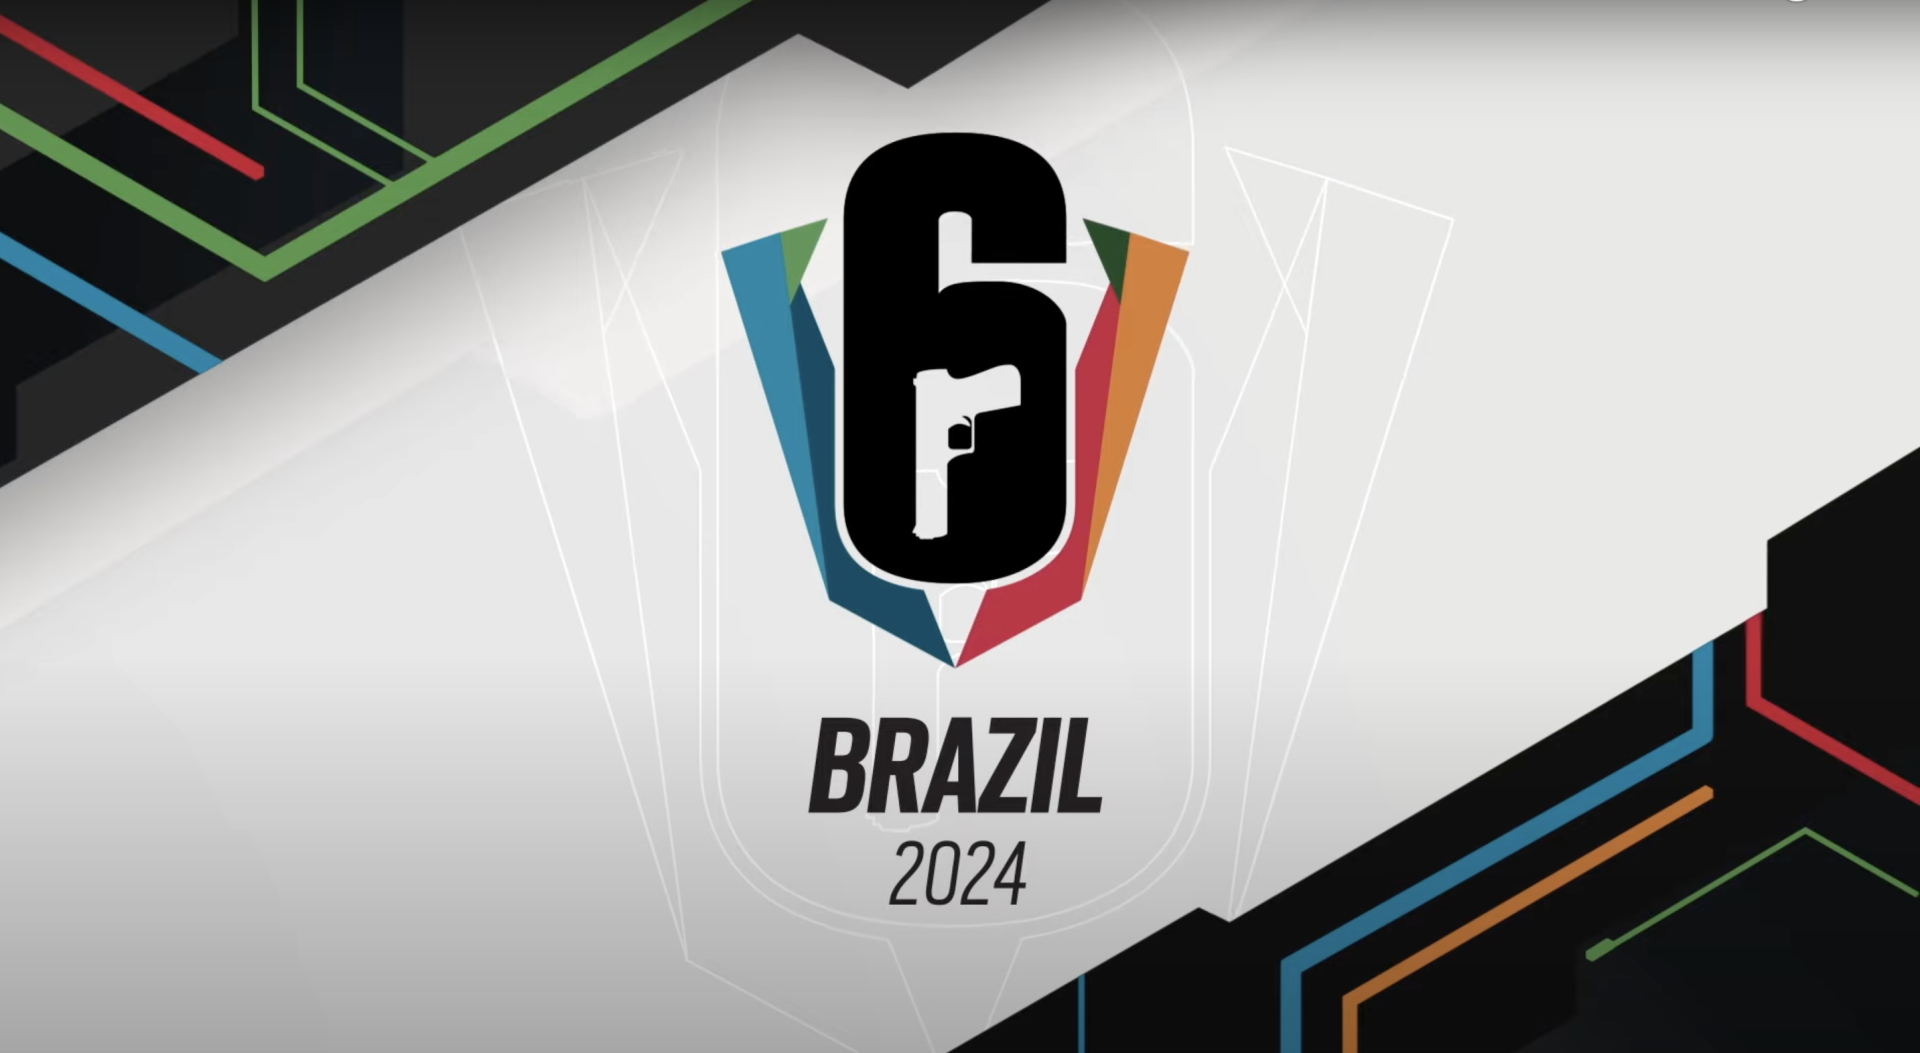 Six Invitational heads to Brazil in 2024